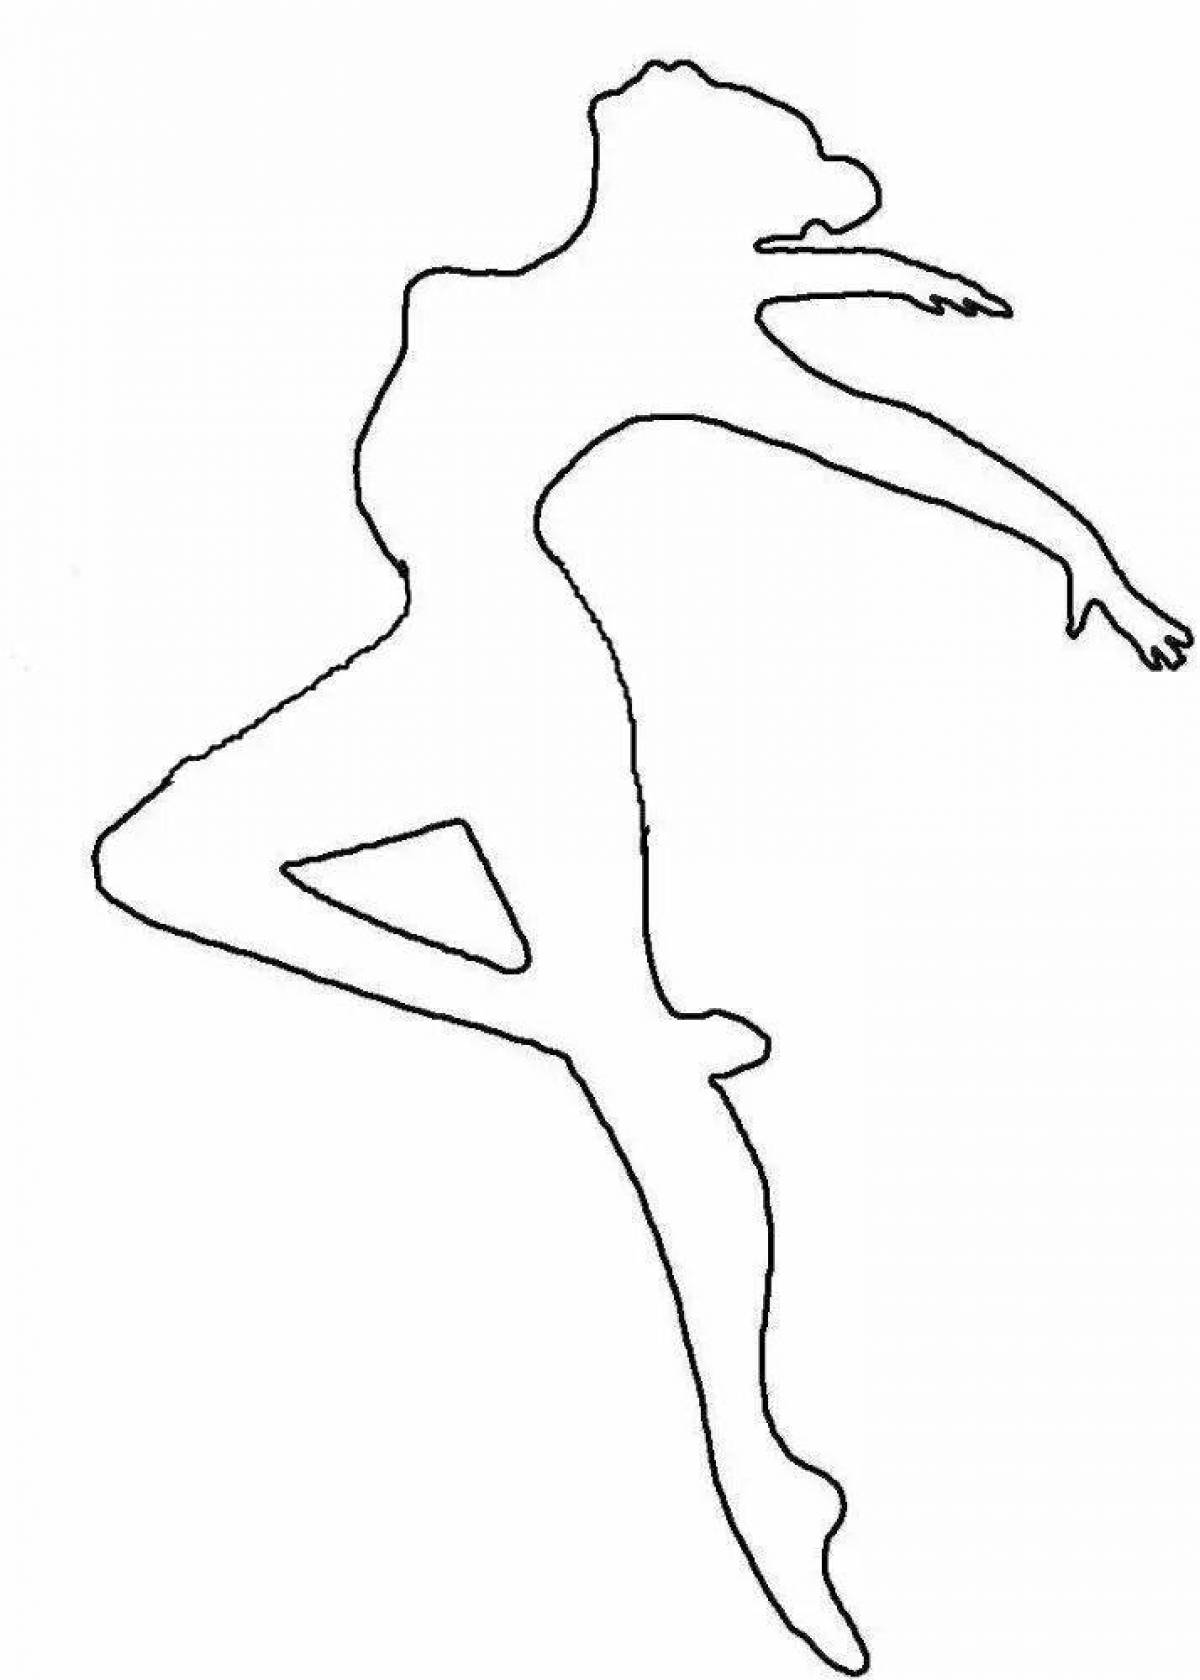 Joyful ballerina silhouette coloring page